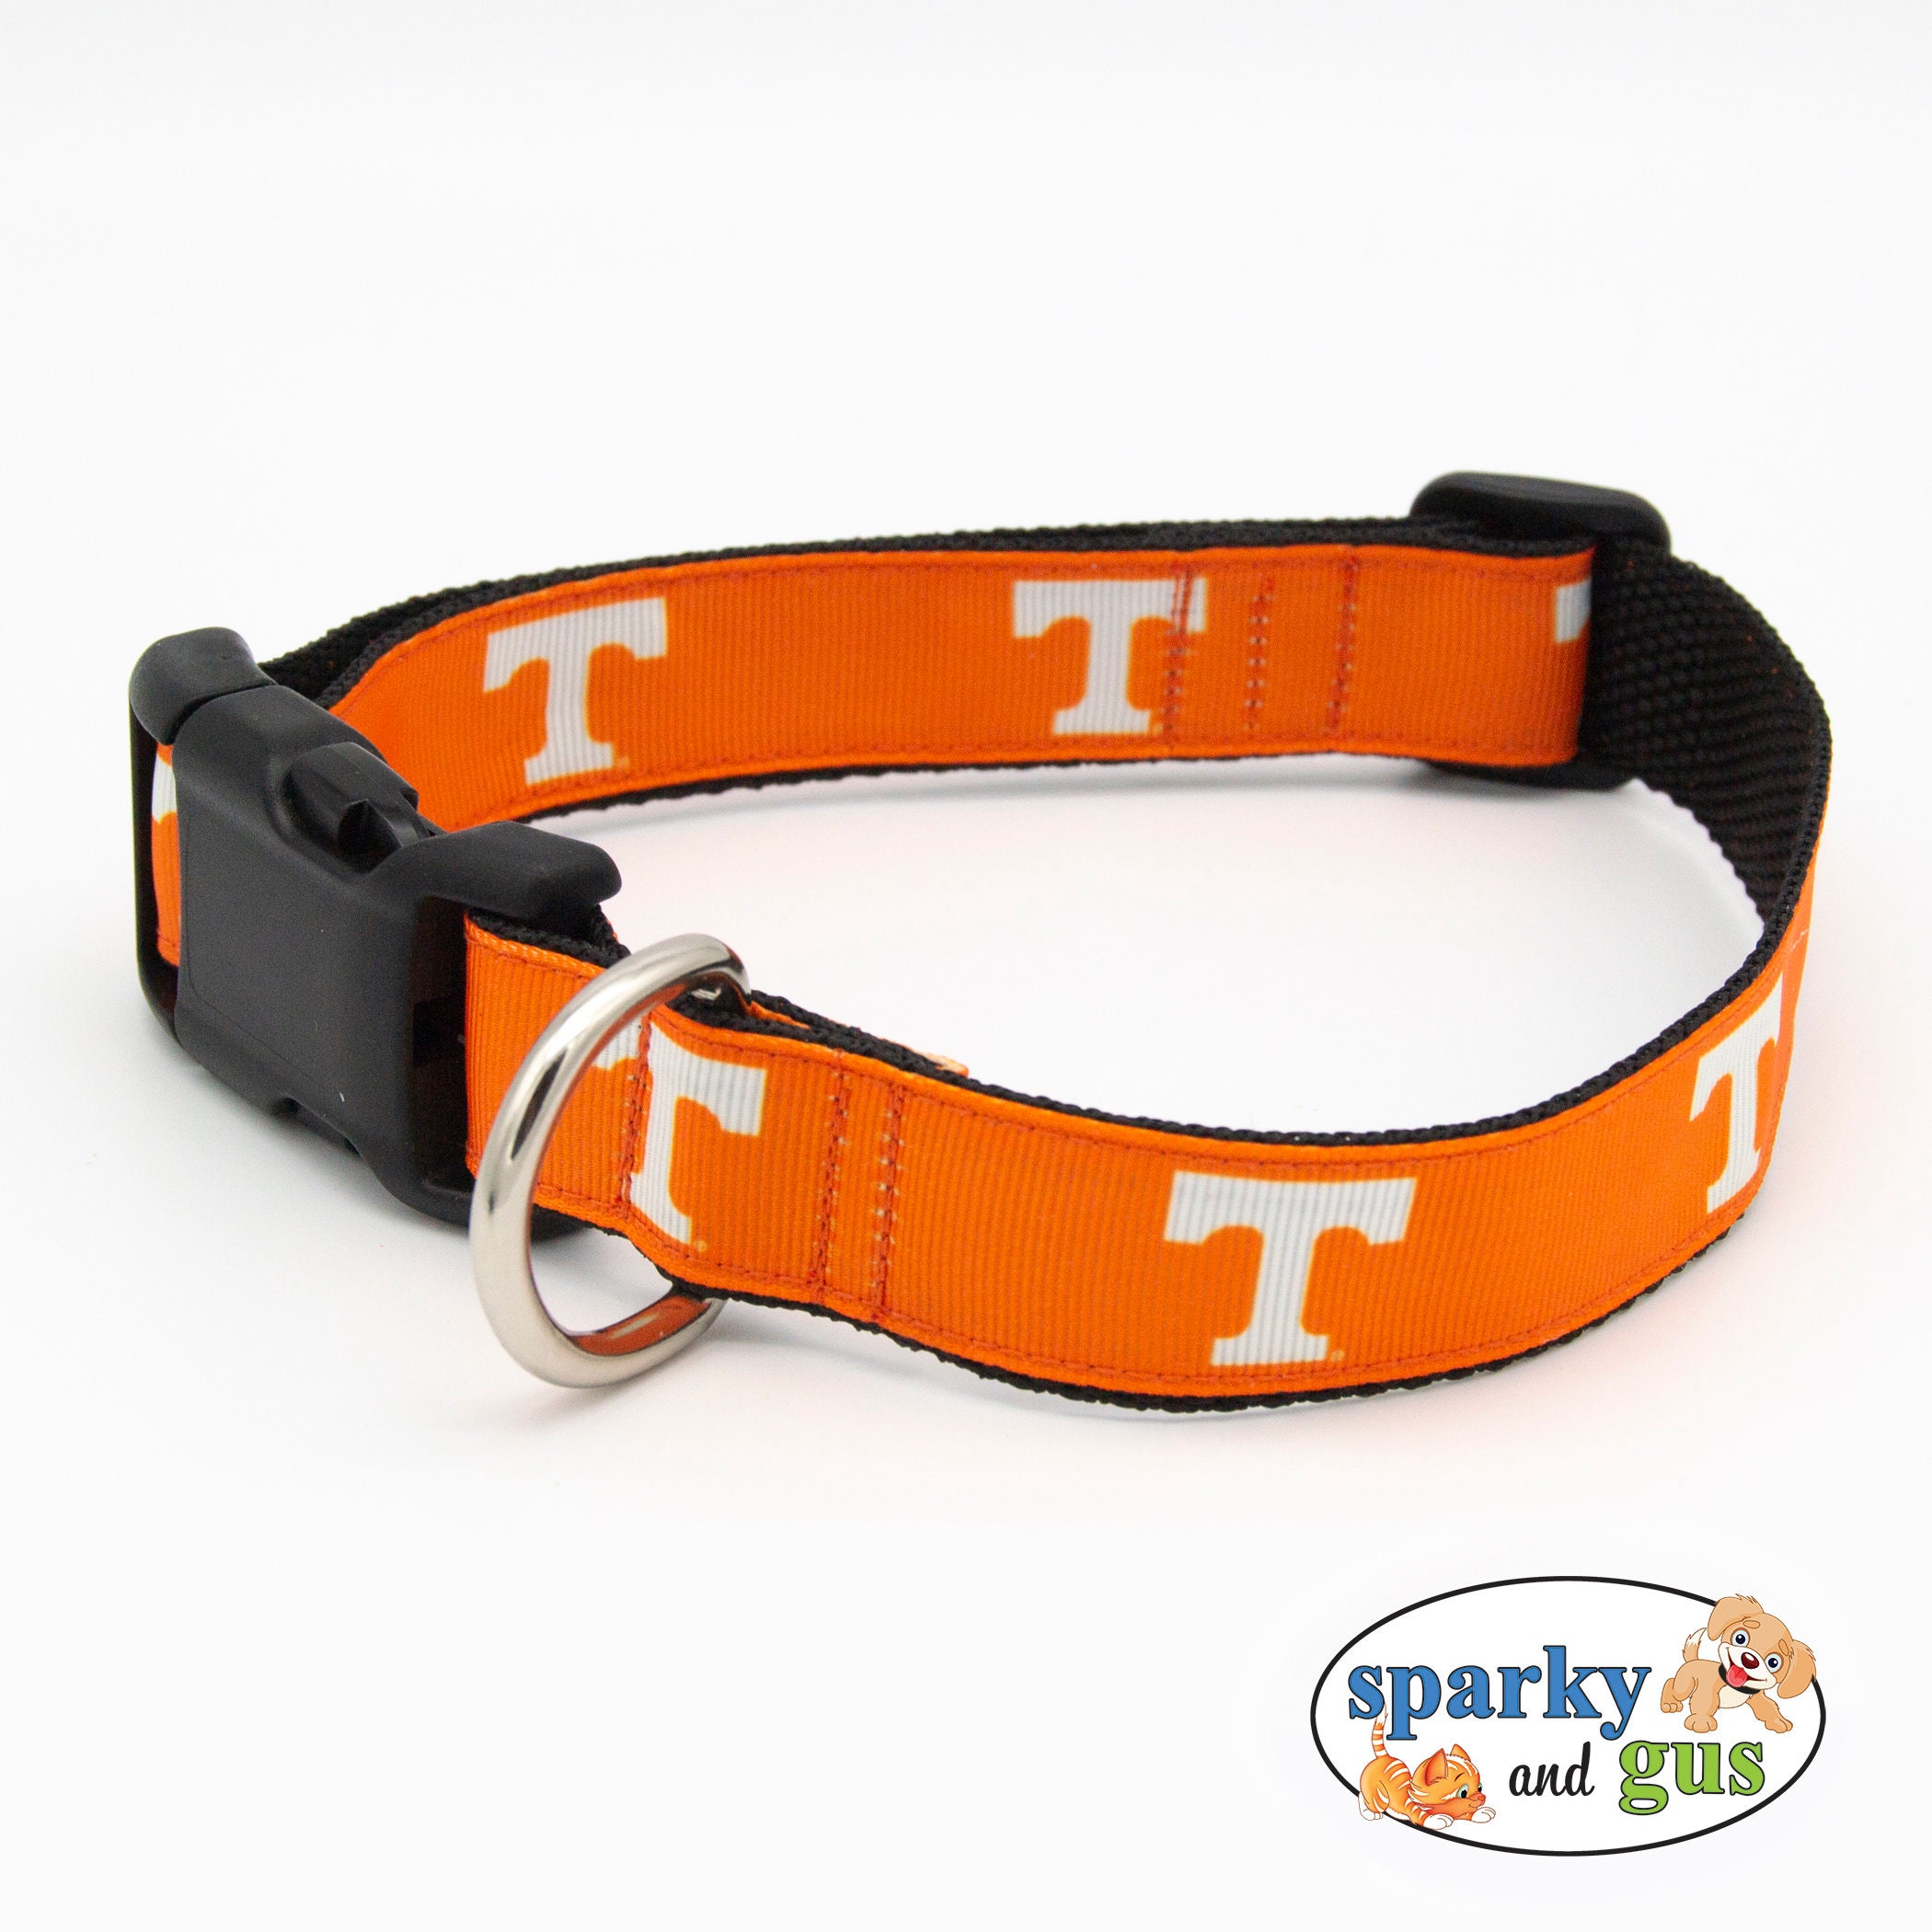  Tennessee Volunteers Ribbon Dog Collar - Large : Pet Supplies